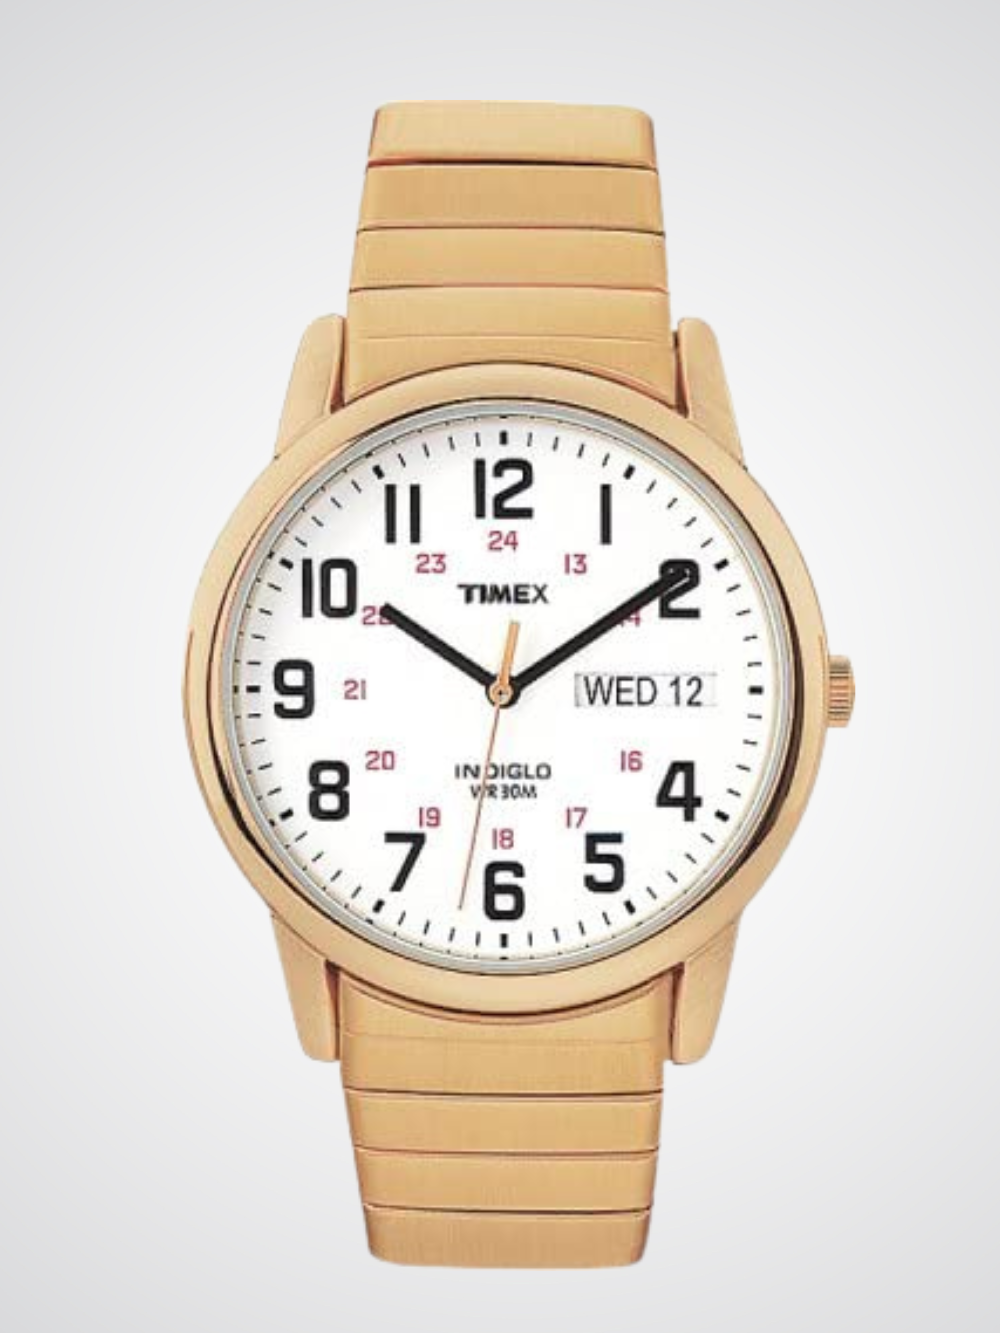 Timex Men's Watch - Kreative Design